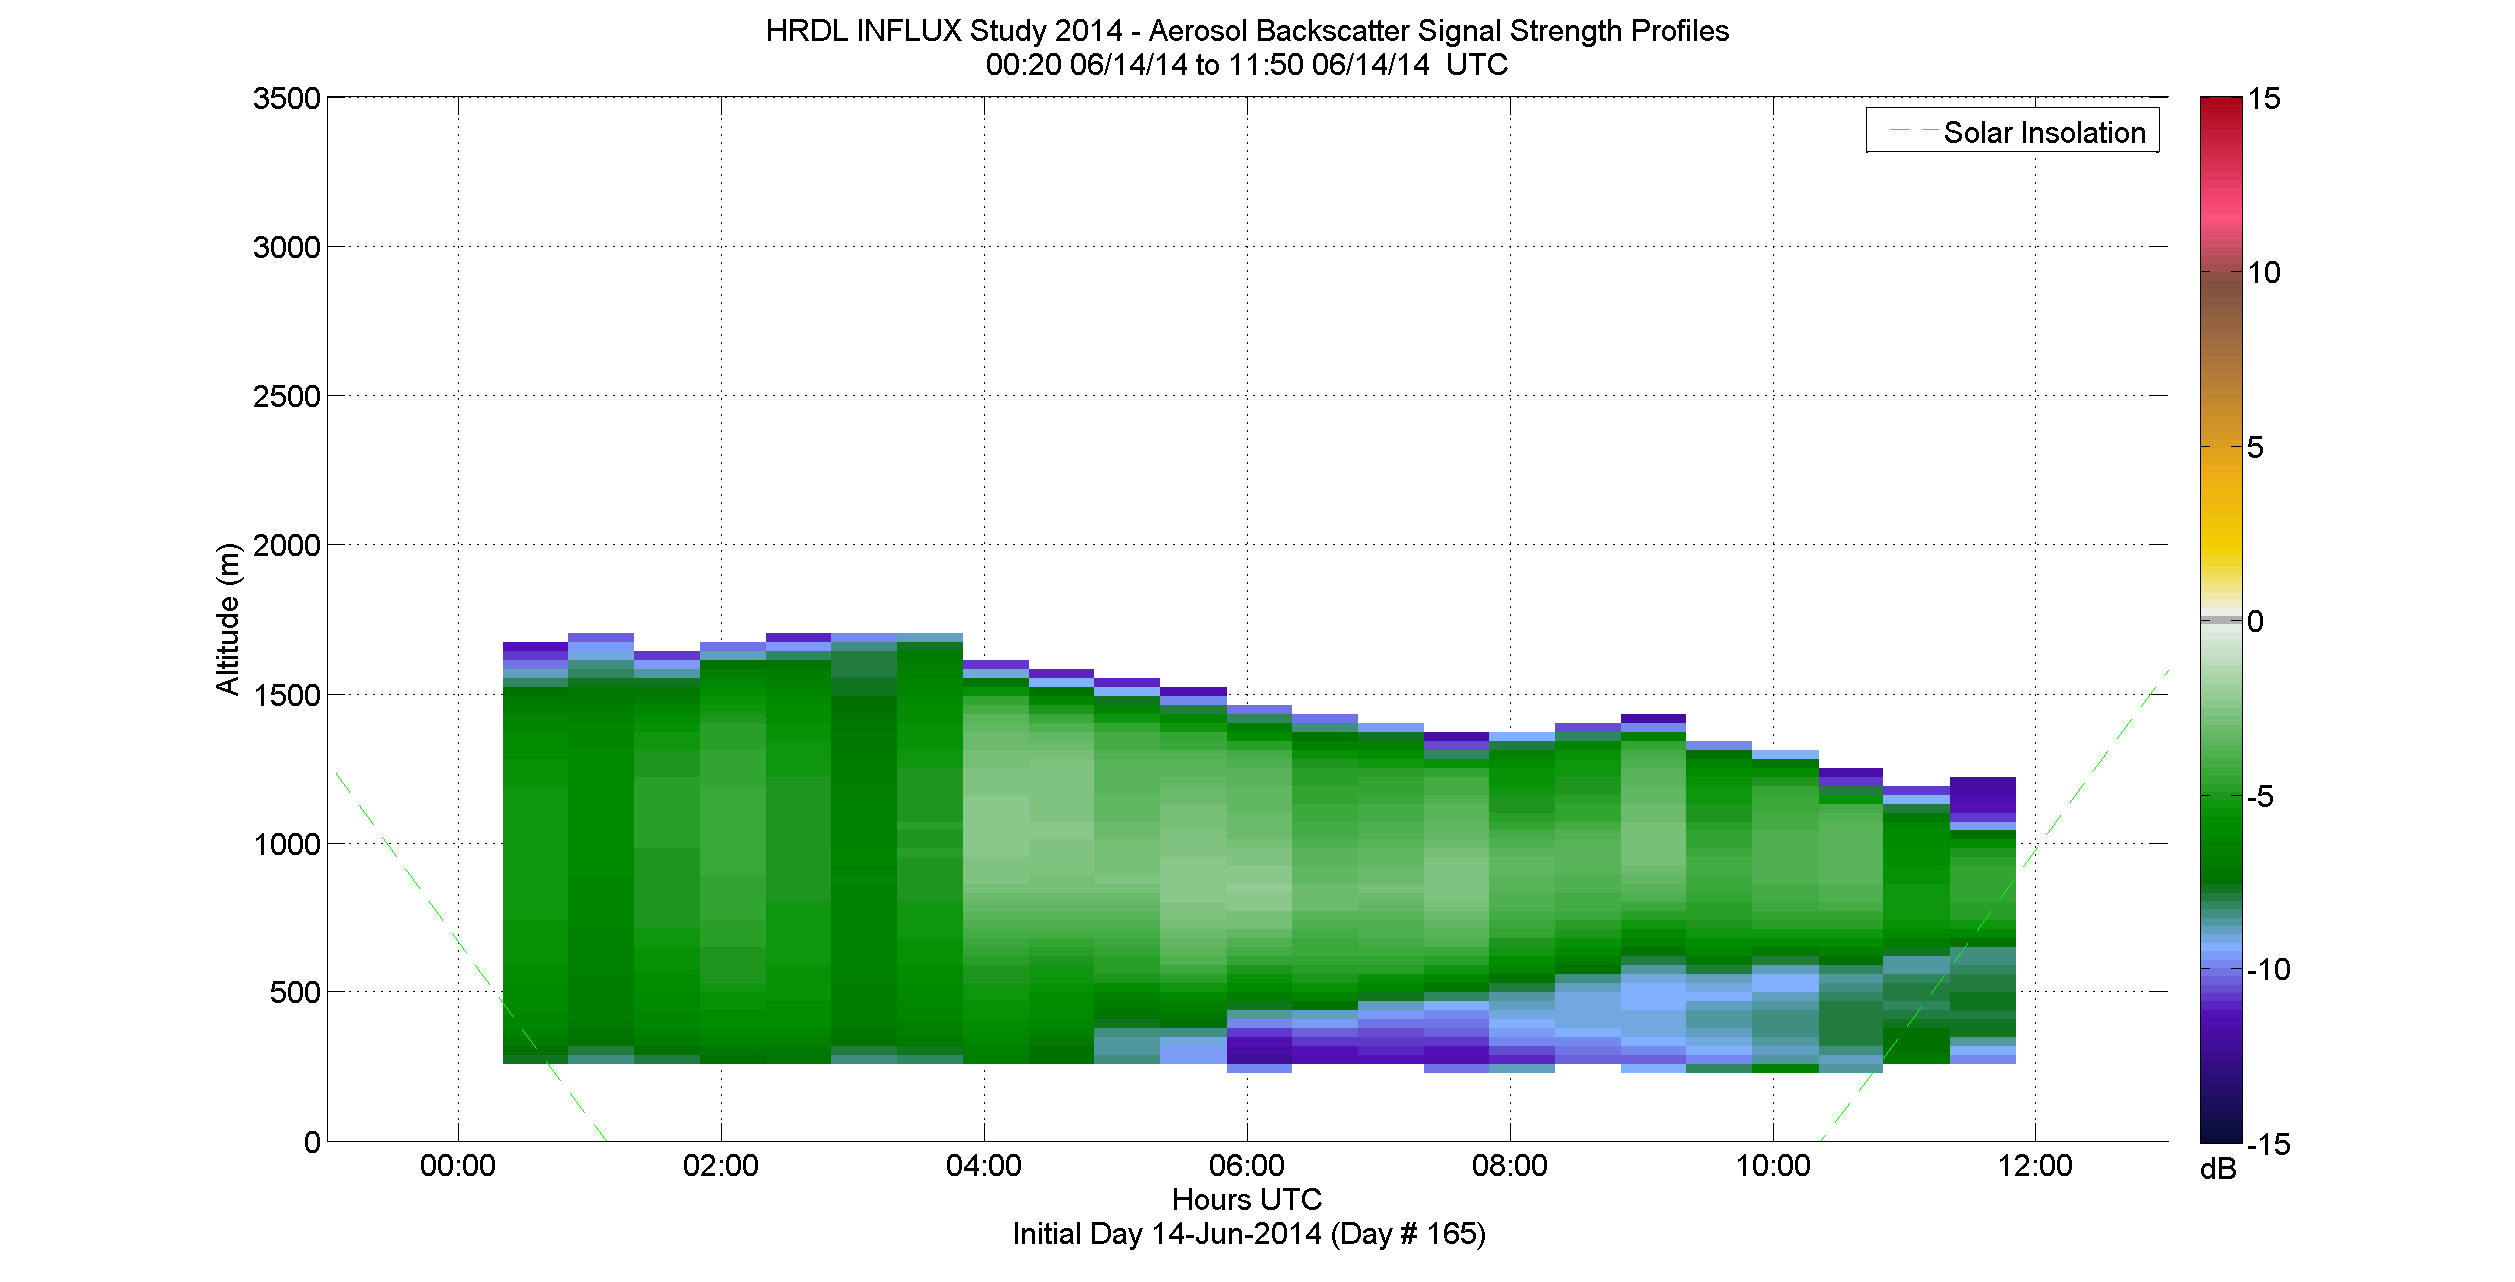 HRDL aerosol backscatter signal strength profile - June 14 am